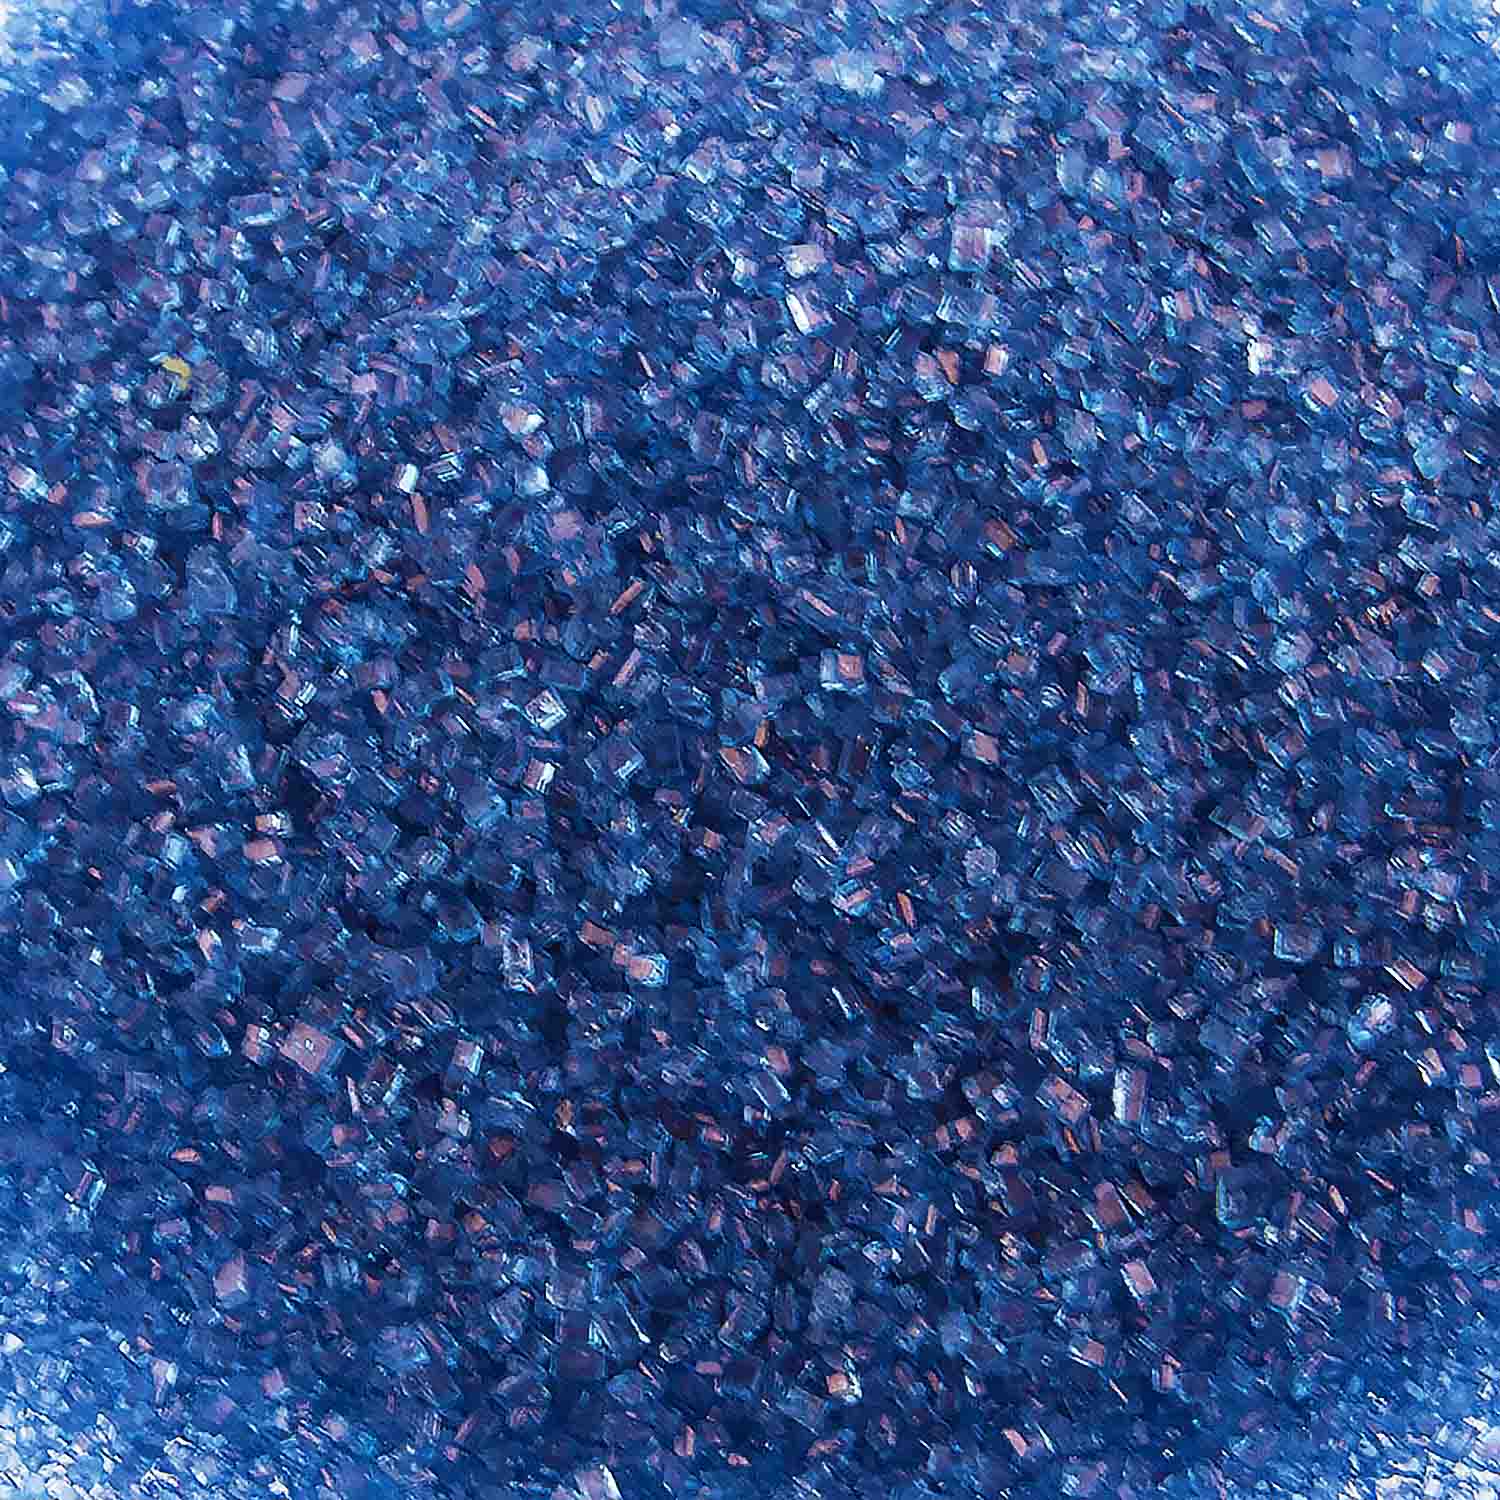 Royal Blue Sanding Sugar